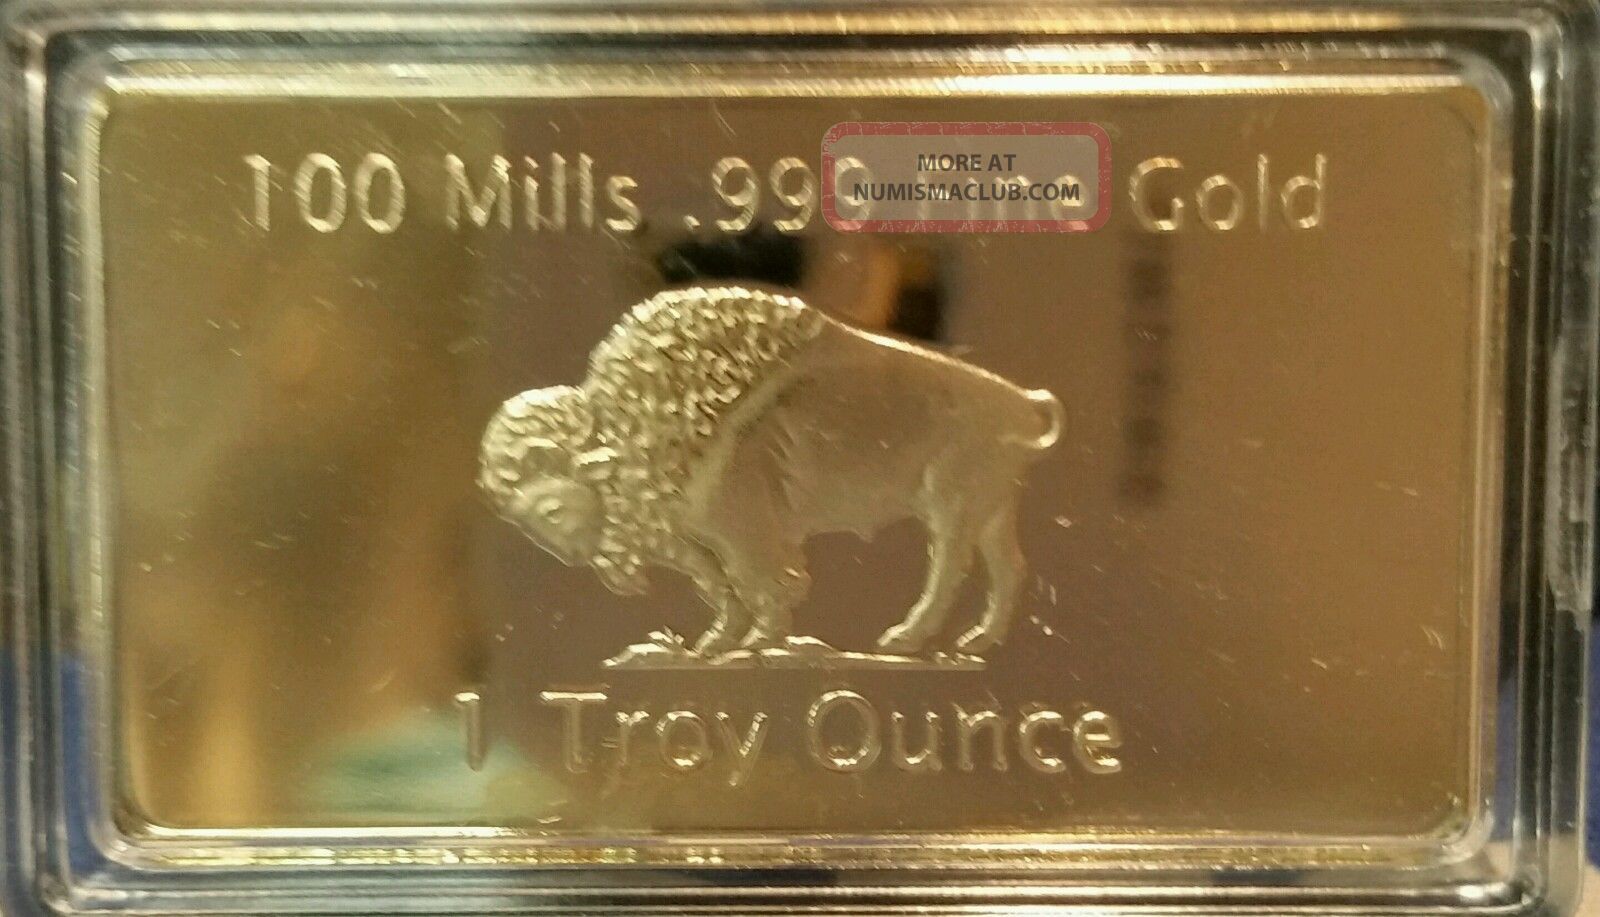 1 Troy Ounce Gold Buffalo Bar 100 Mills Clad.  999 24k Fine Bullion Bar. Bars & Rounds photo